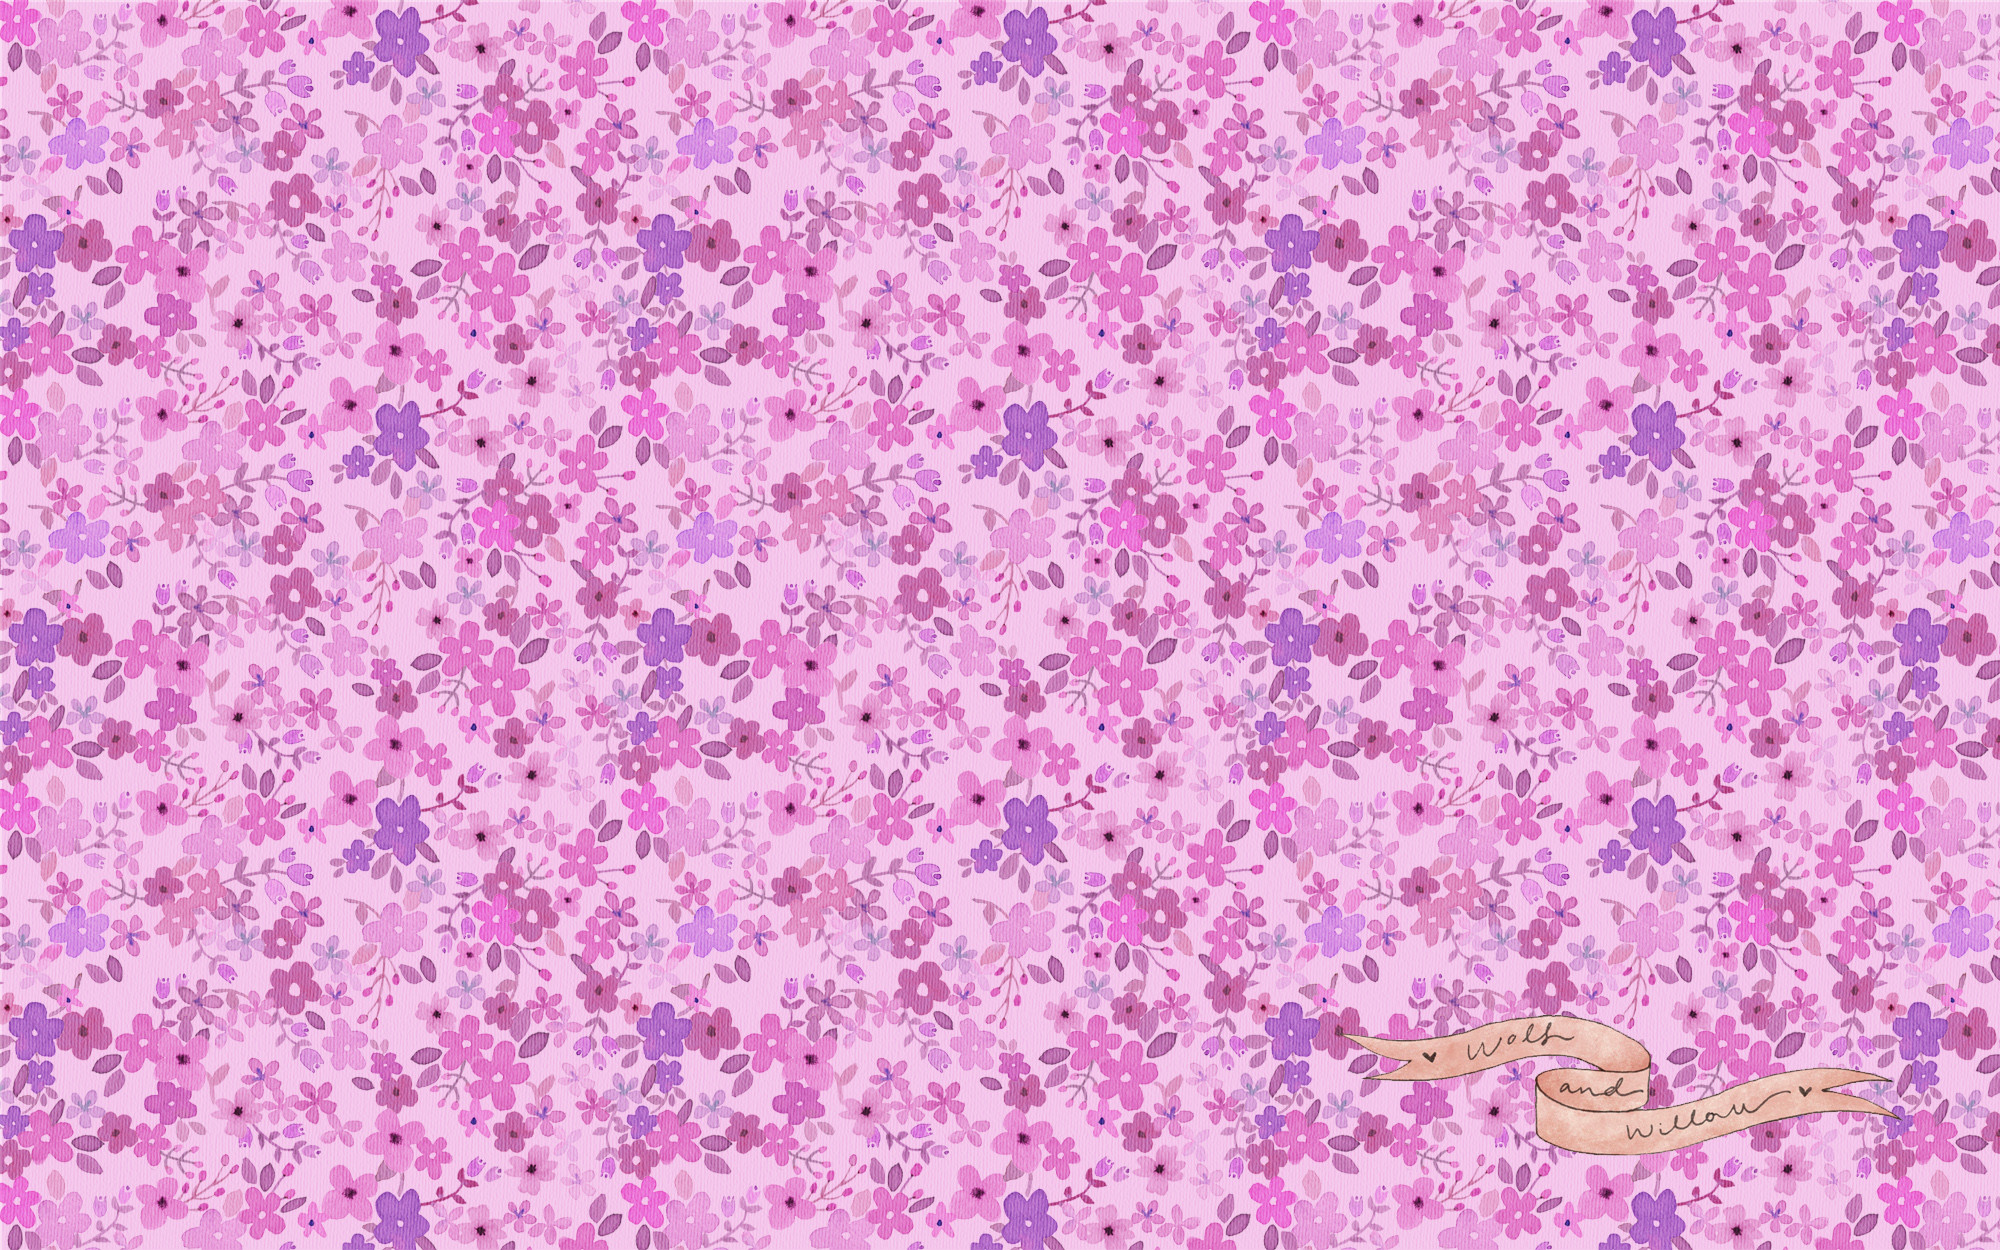 2000x1250 Violet seamless wallpaper pattern — Stock Vector Â© Zybr78 #8553599 ...